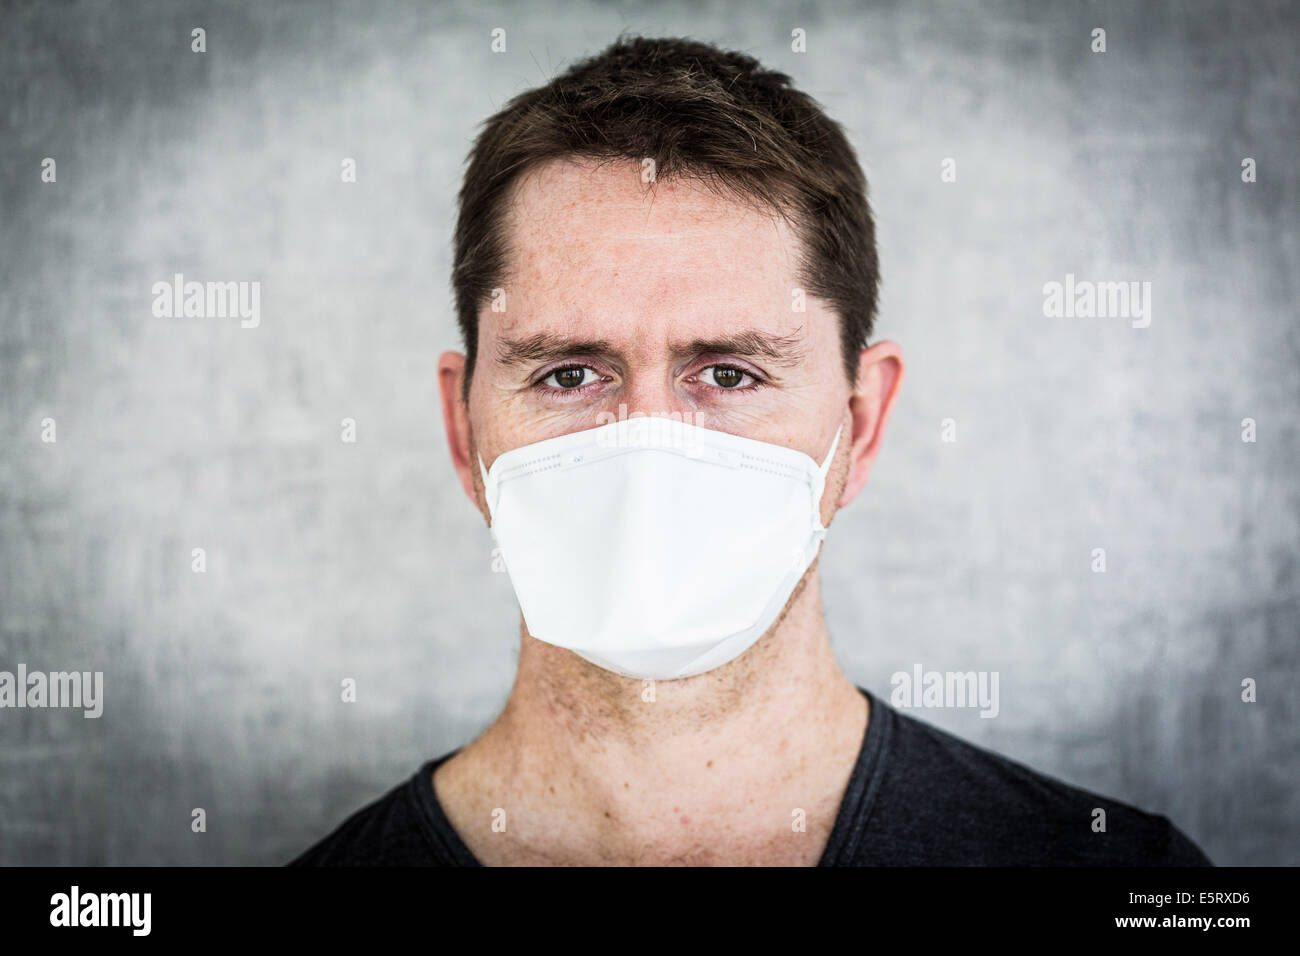 Man wearing a face mask. Stock Photo